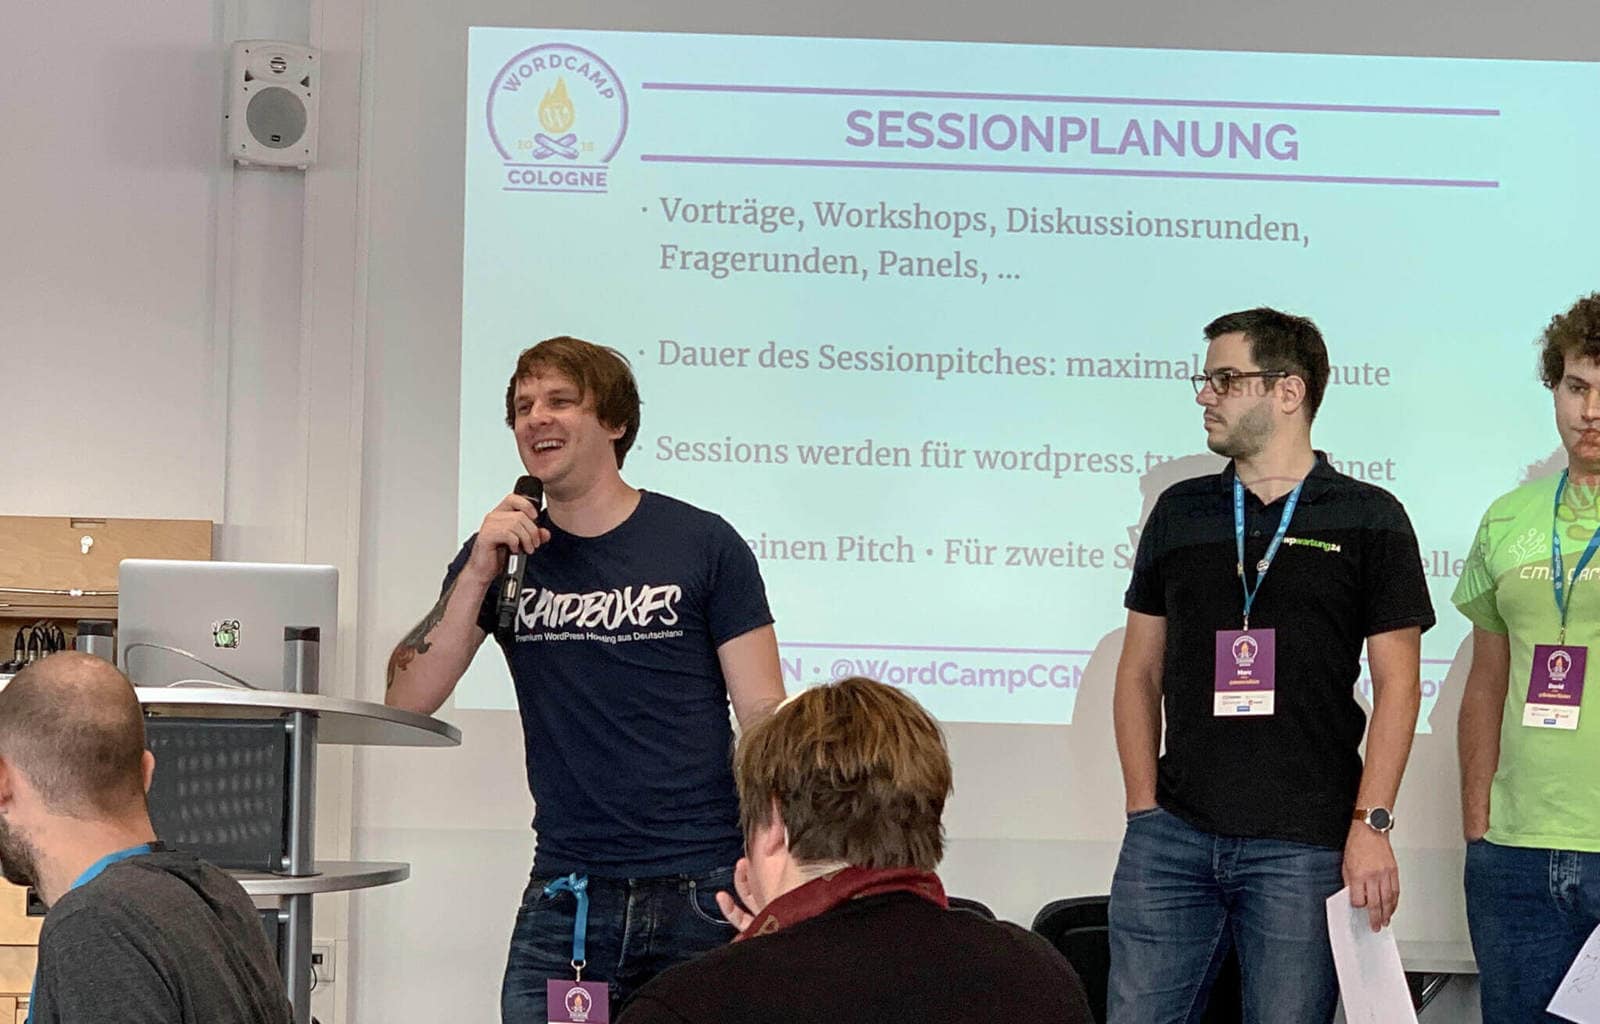 WordCamp Cologne: Matthias von Raidboxes na sesji pitch